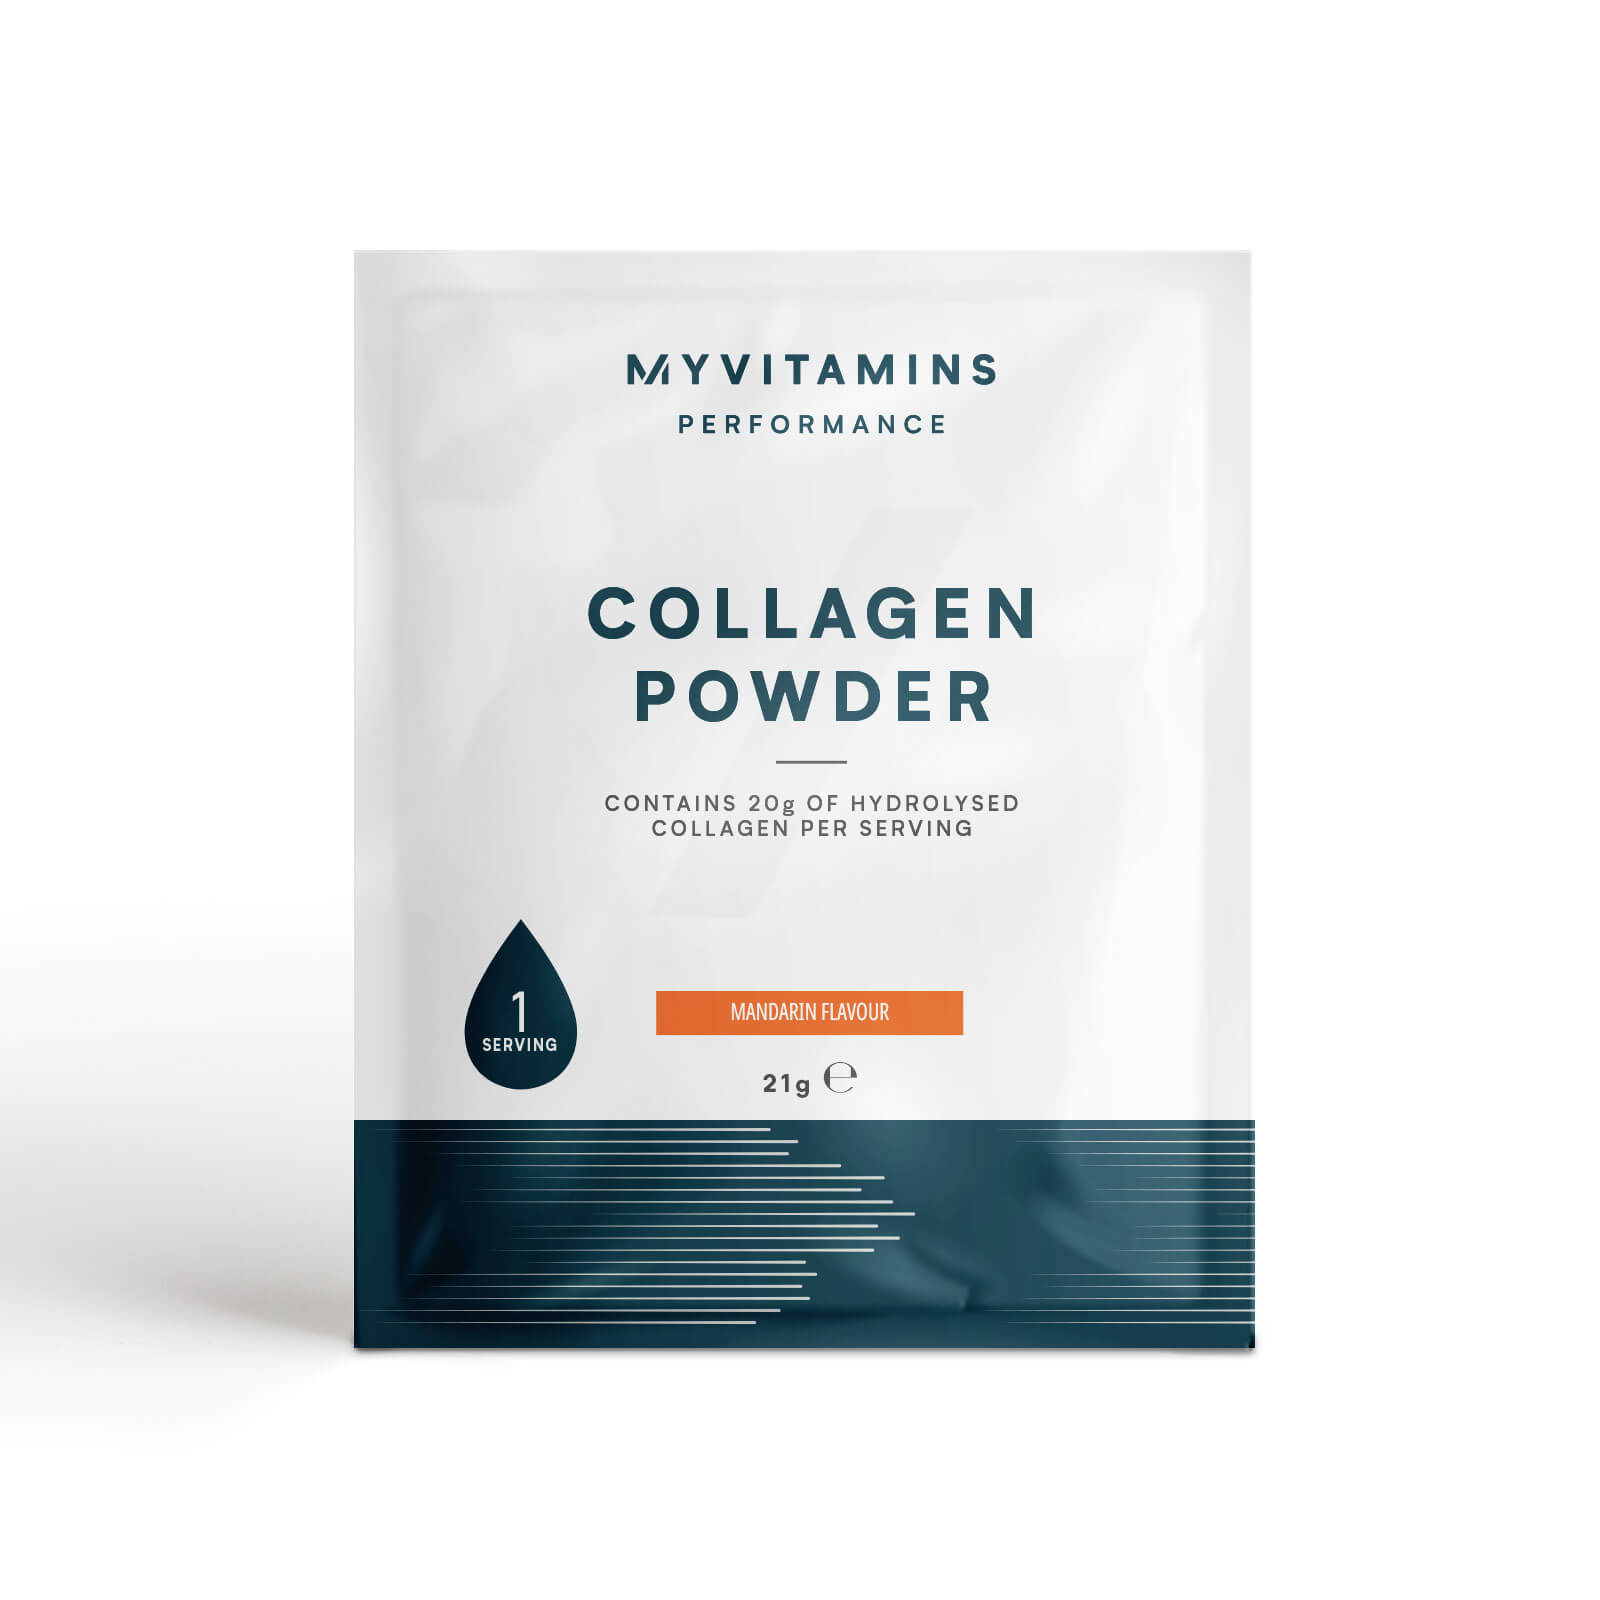 Collagen Powder (Sample) - 1servings - Mandarine